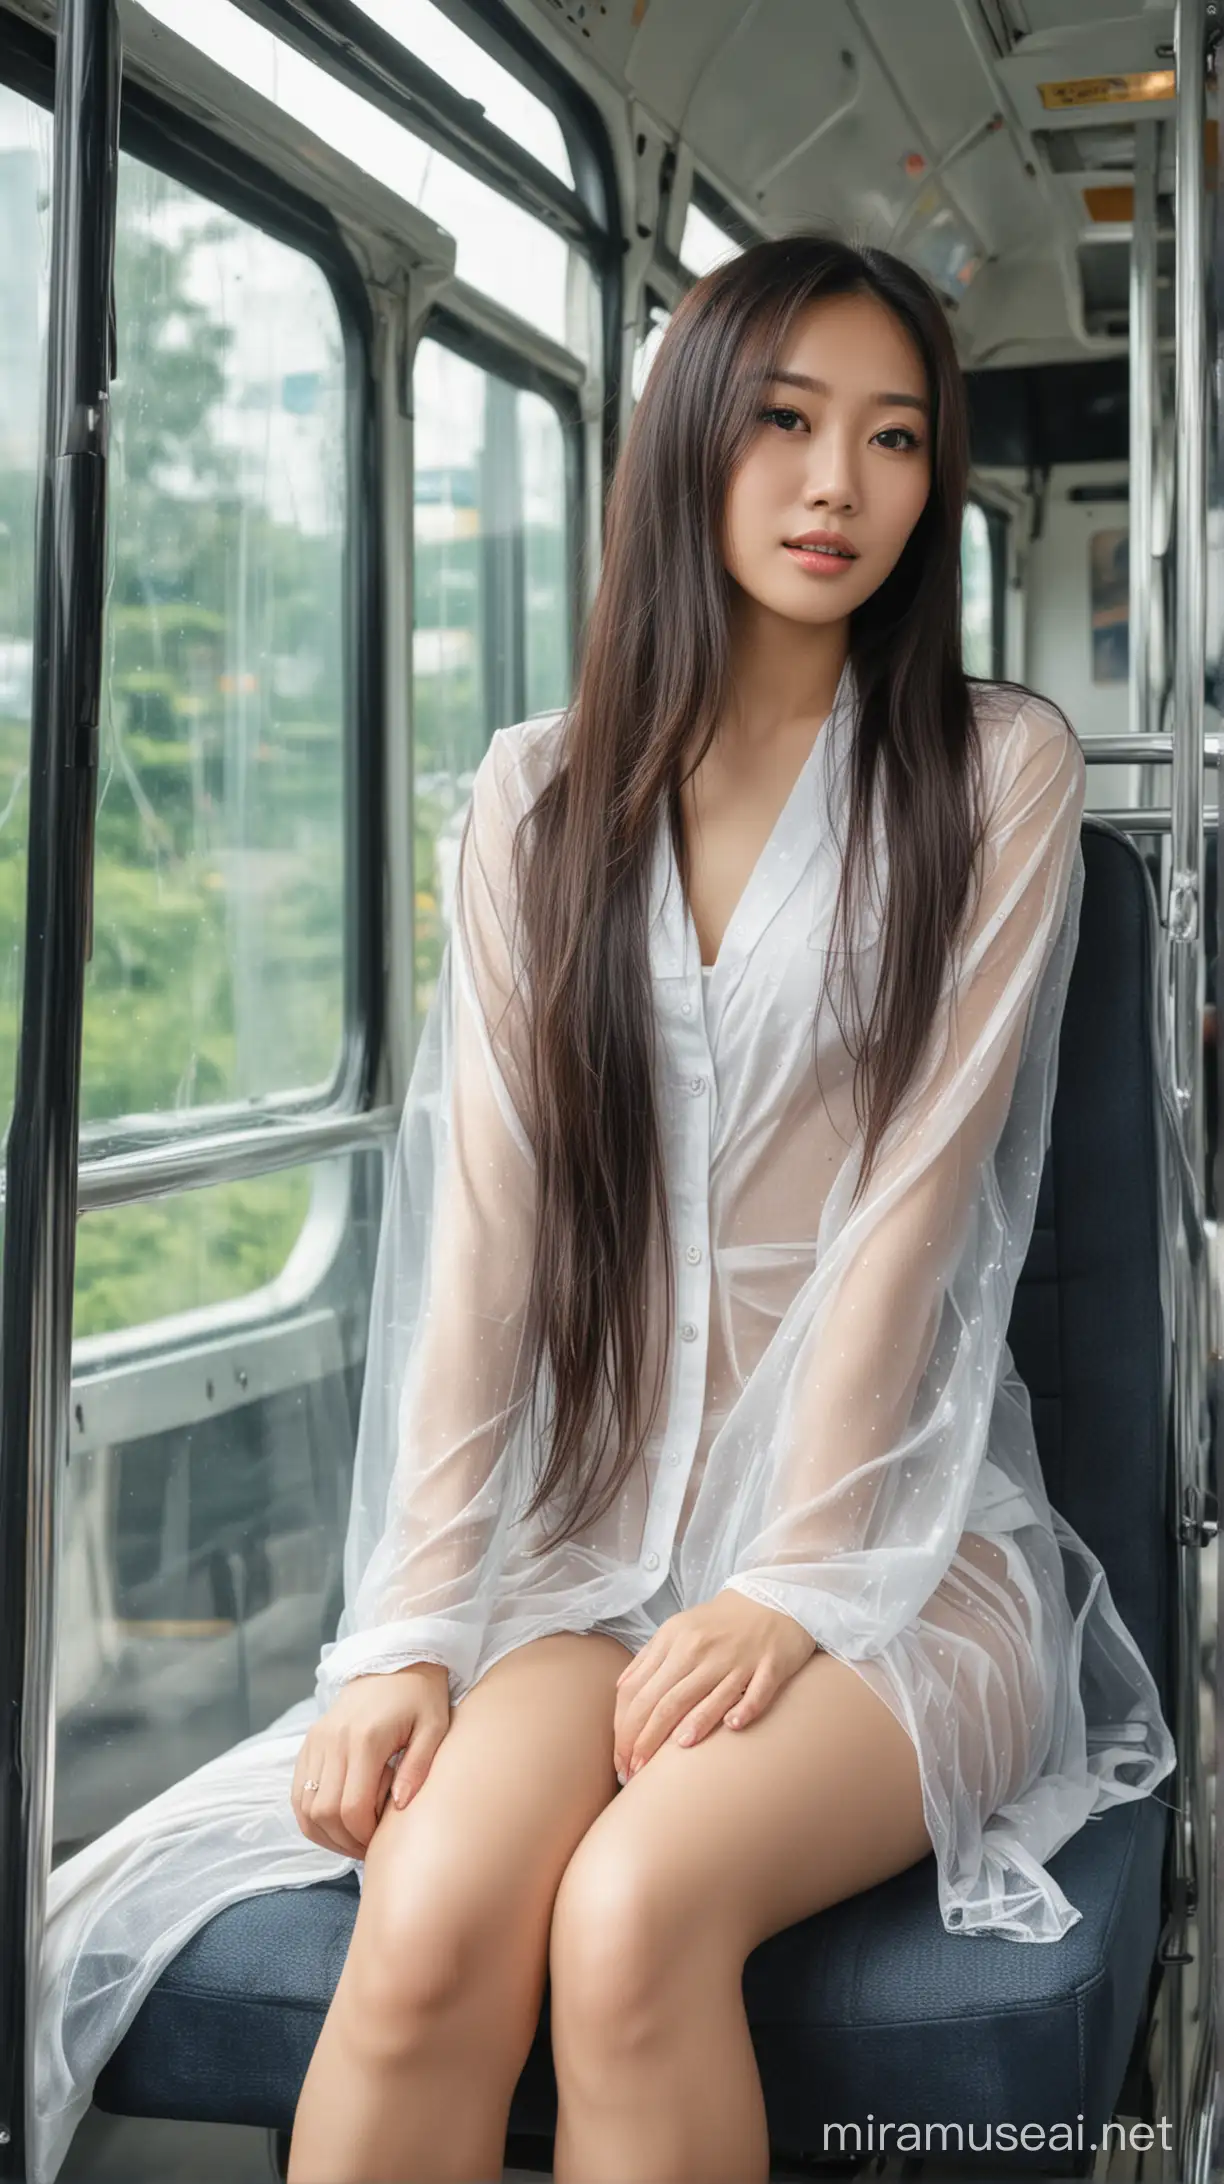 A beauty asian woman, long hair,  transparent clothe, white skin, sitting, inside bus, legs open, morning